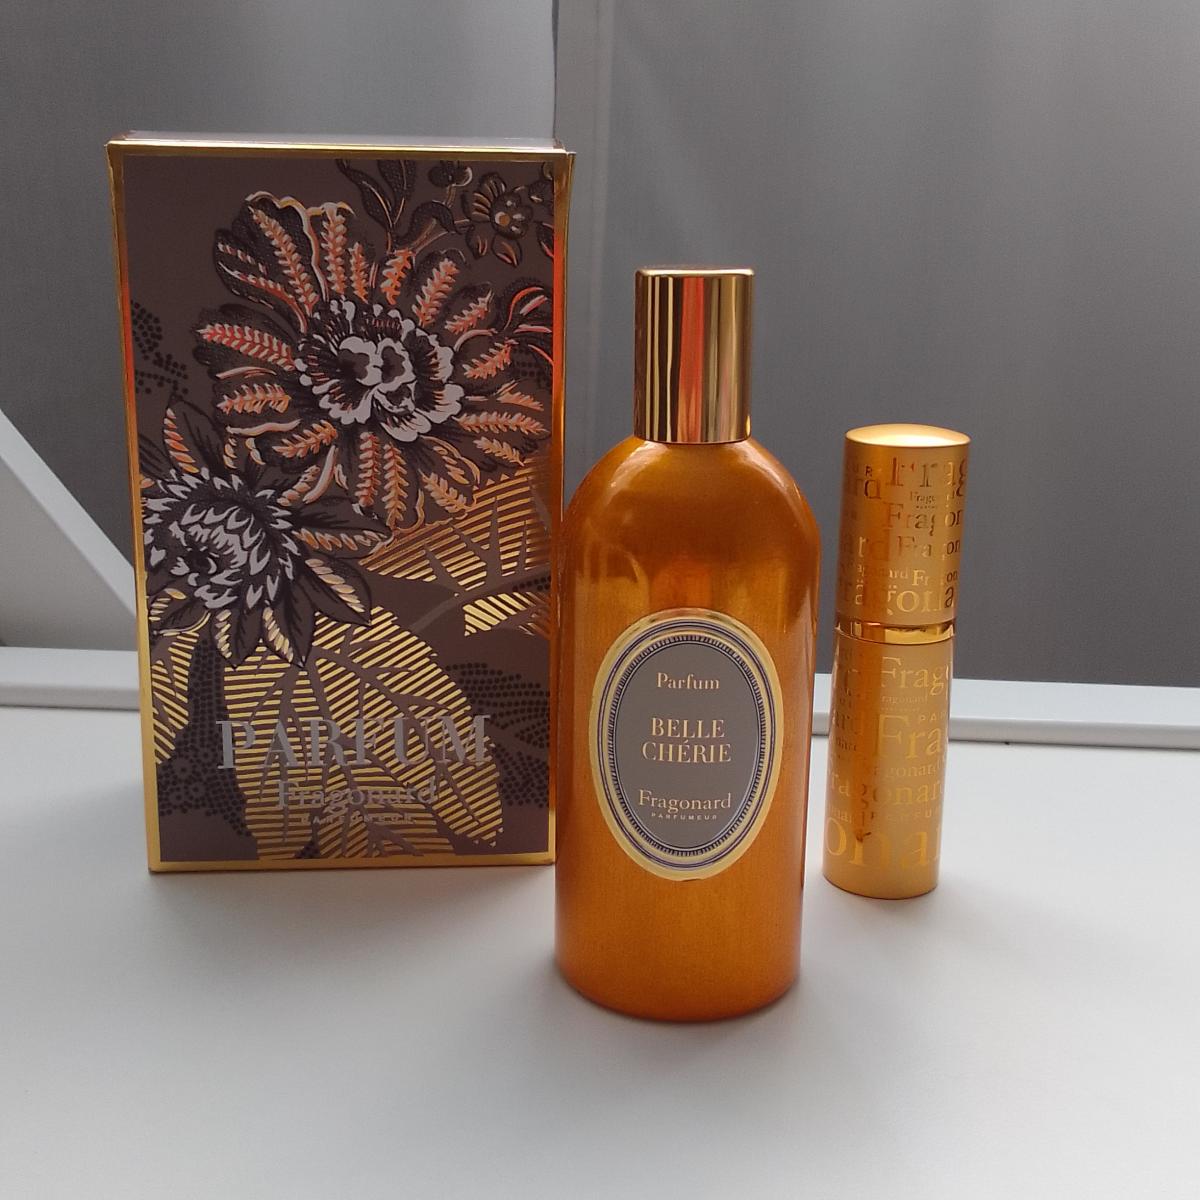 Belle Chérie Parfum Fragonard Perfume A Fragrance For Women 2018 5281